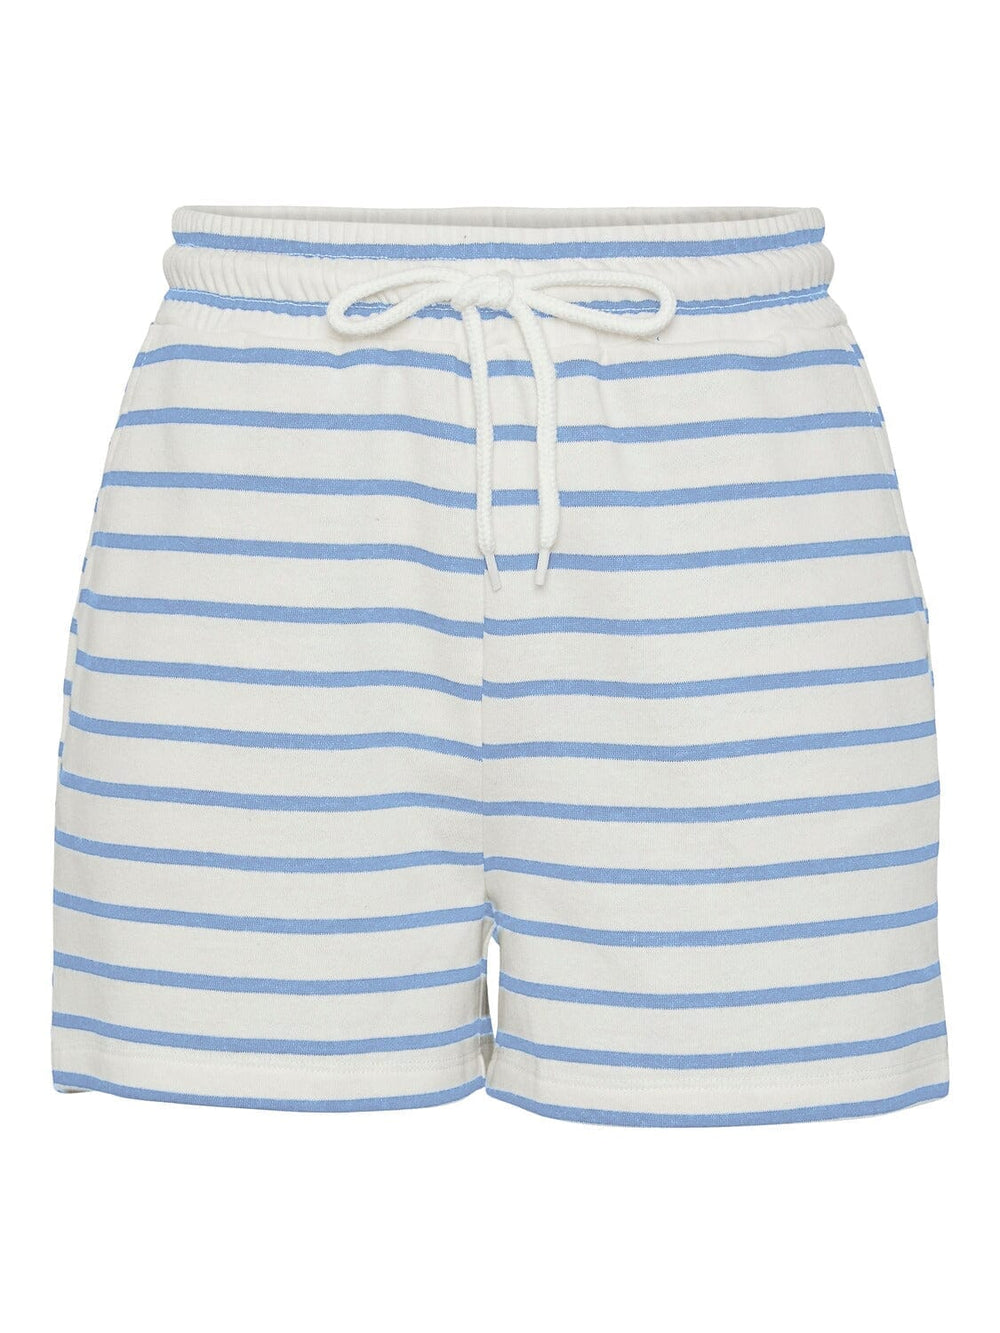 Pieces - Pcchilli Summer Shorts Stripe - 4476107 Cloud Dancer Hydrangea Shorts 